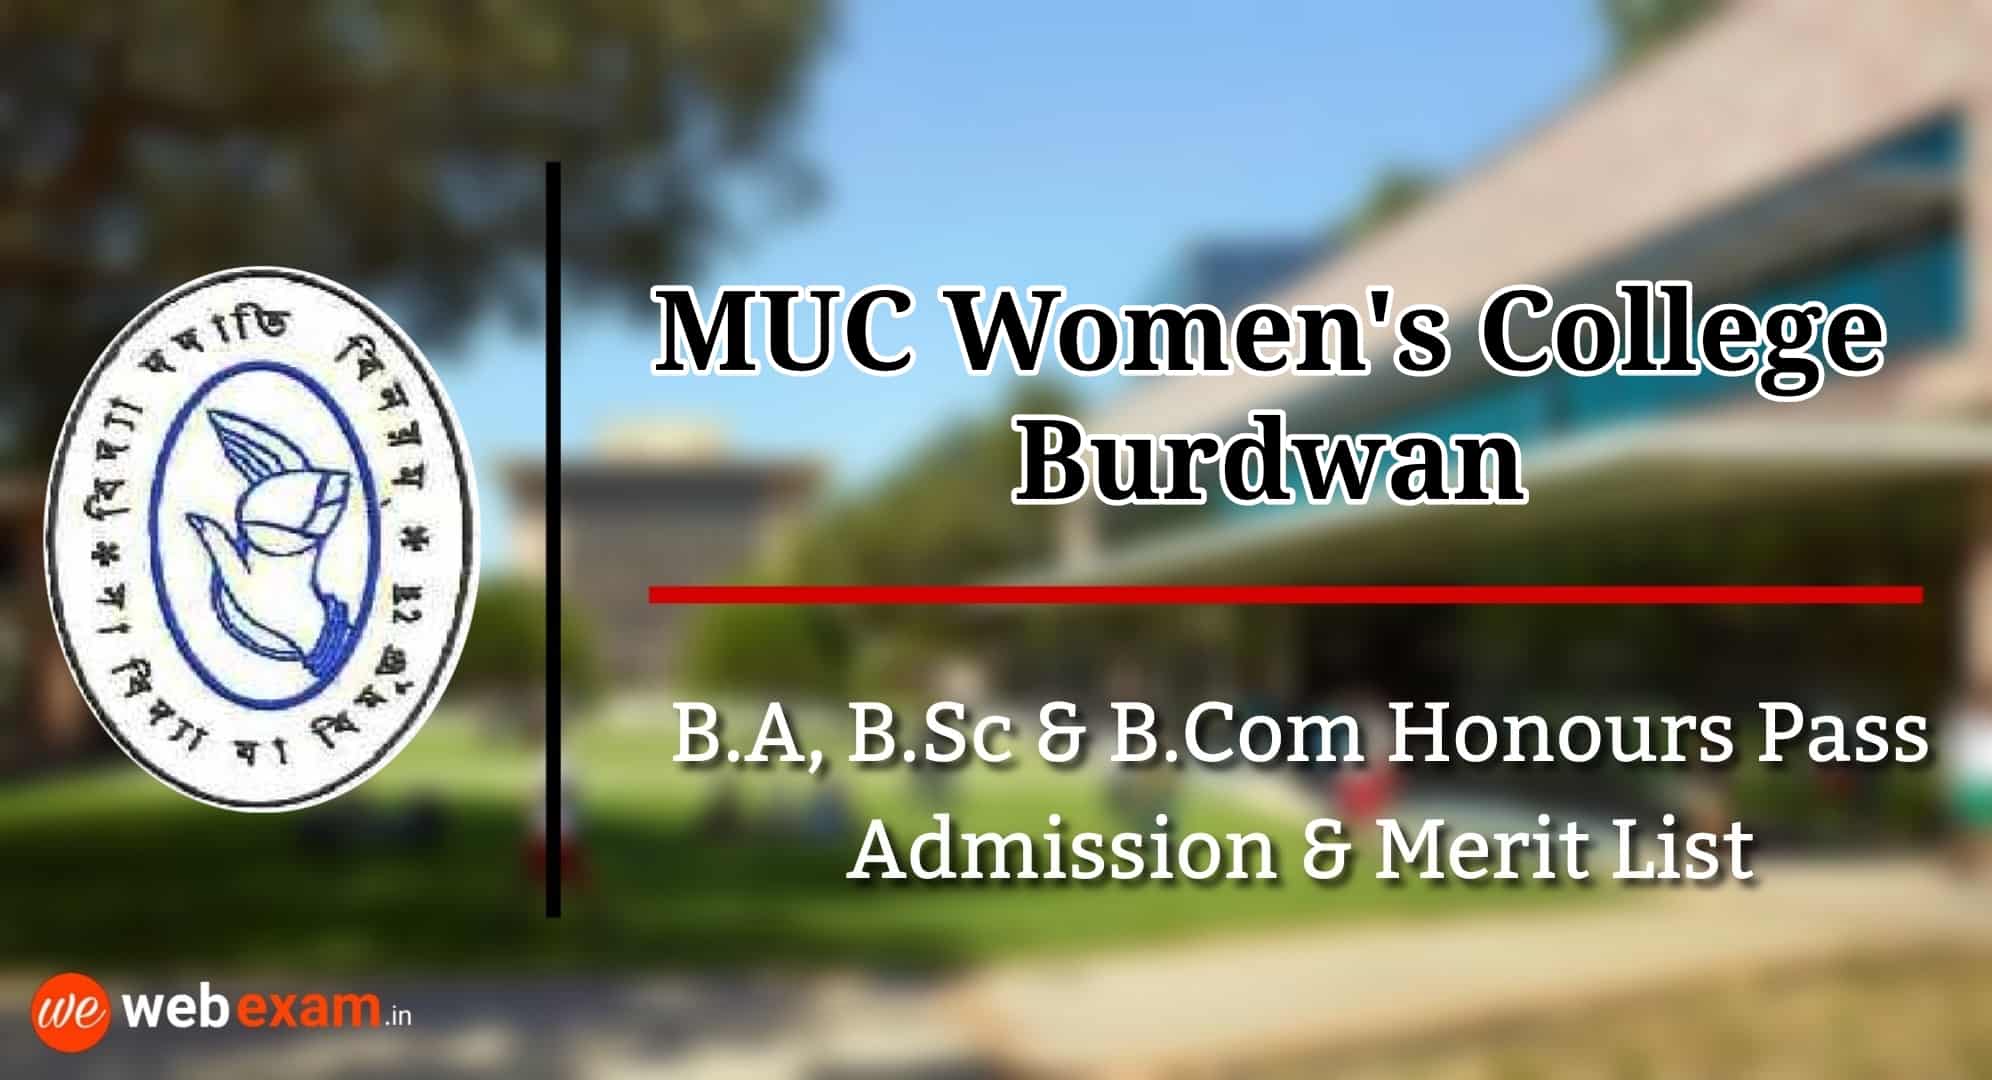 MUC Women's College Admission